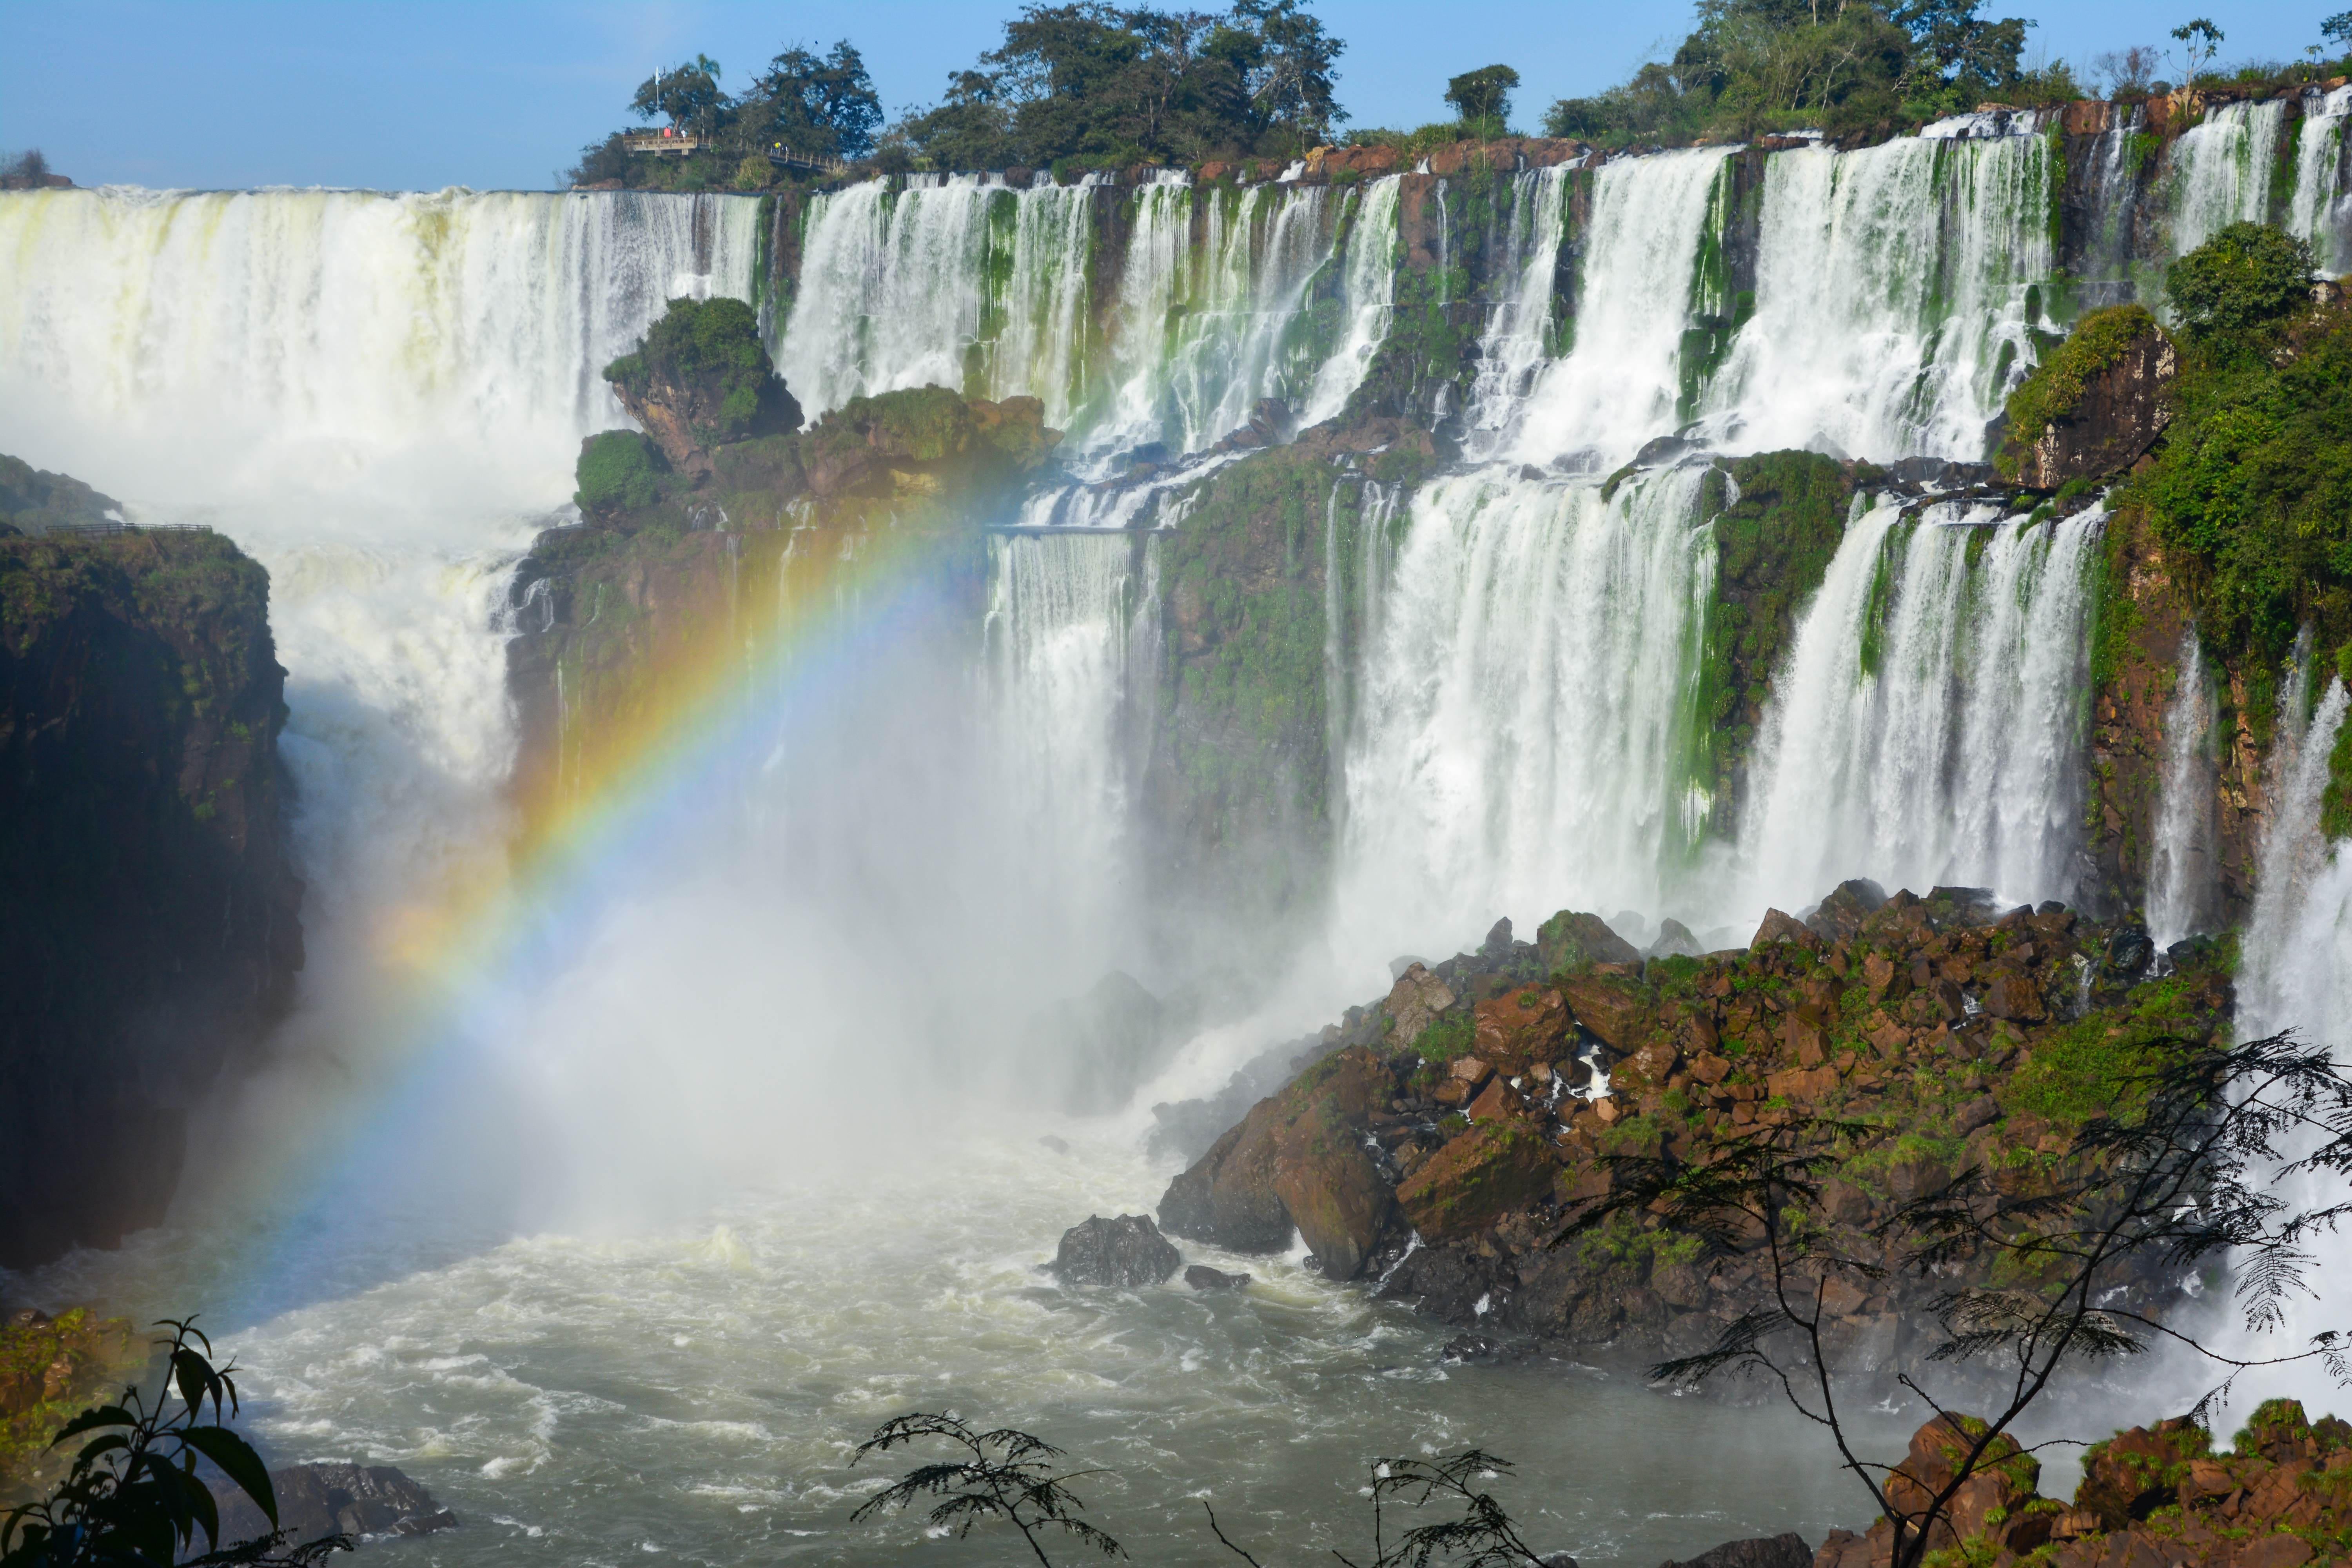 Rainbow visible at lower circuit of Iguazu Falls in Argentina